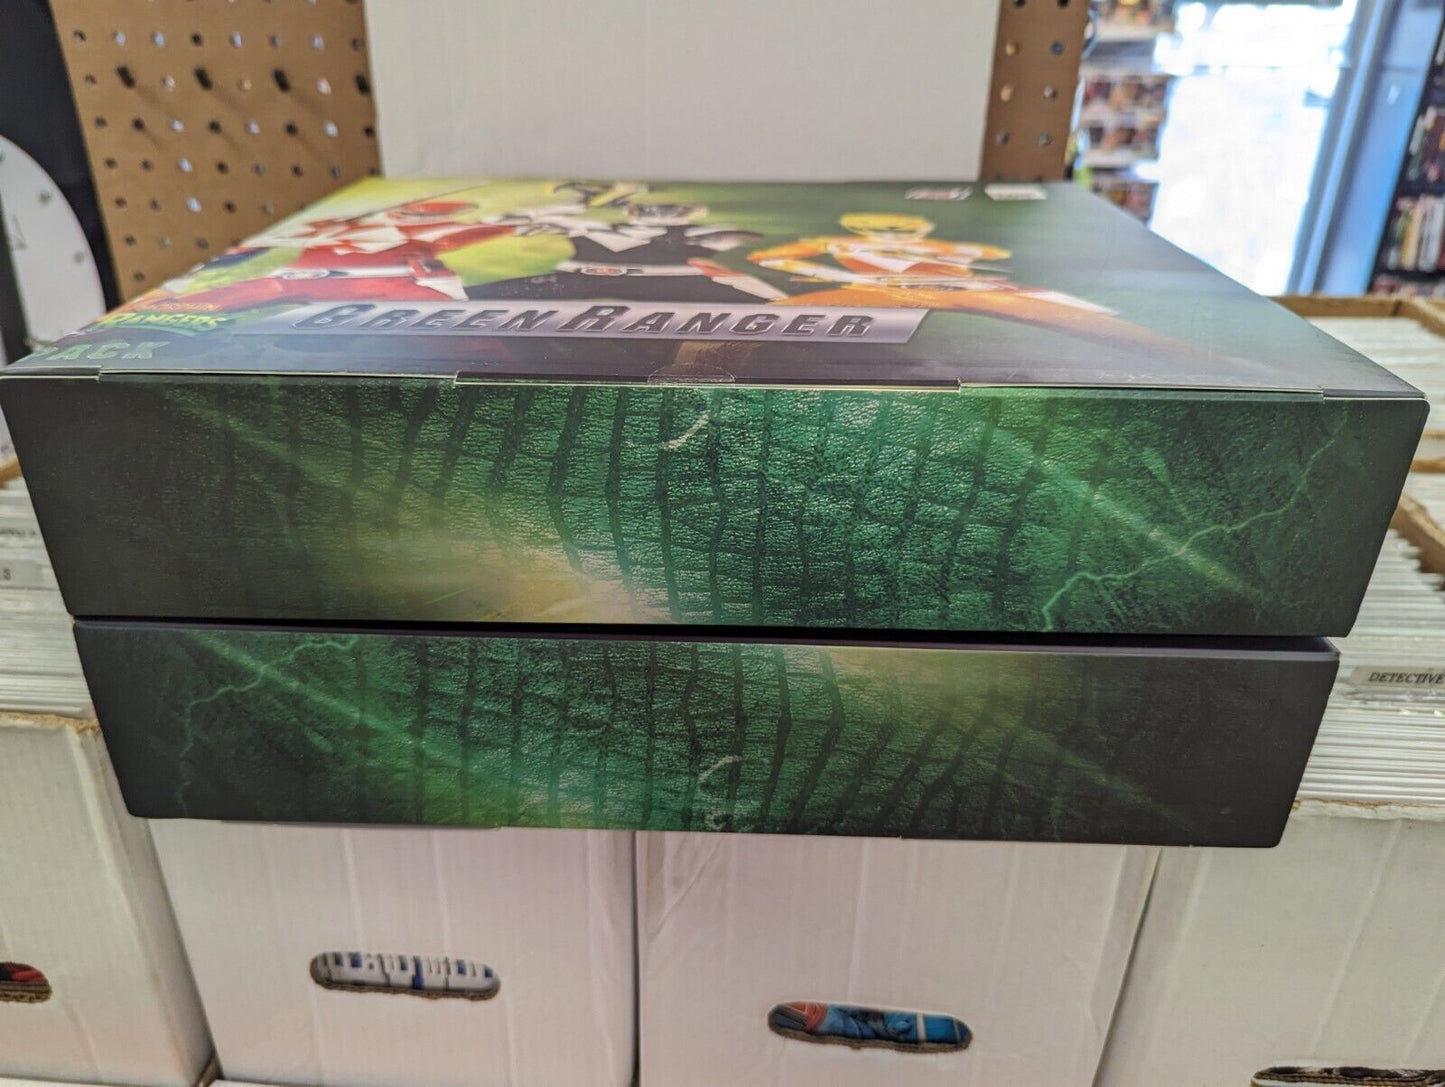 Threezero Mighty Morphin Power Rangers Core Rangers + Green Ranger 6 Pack